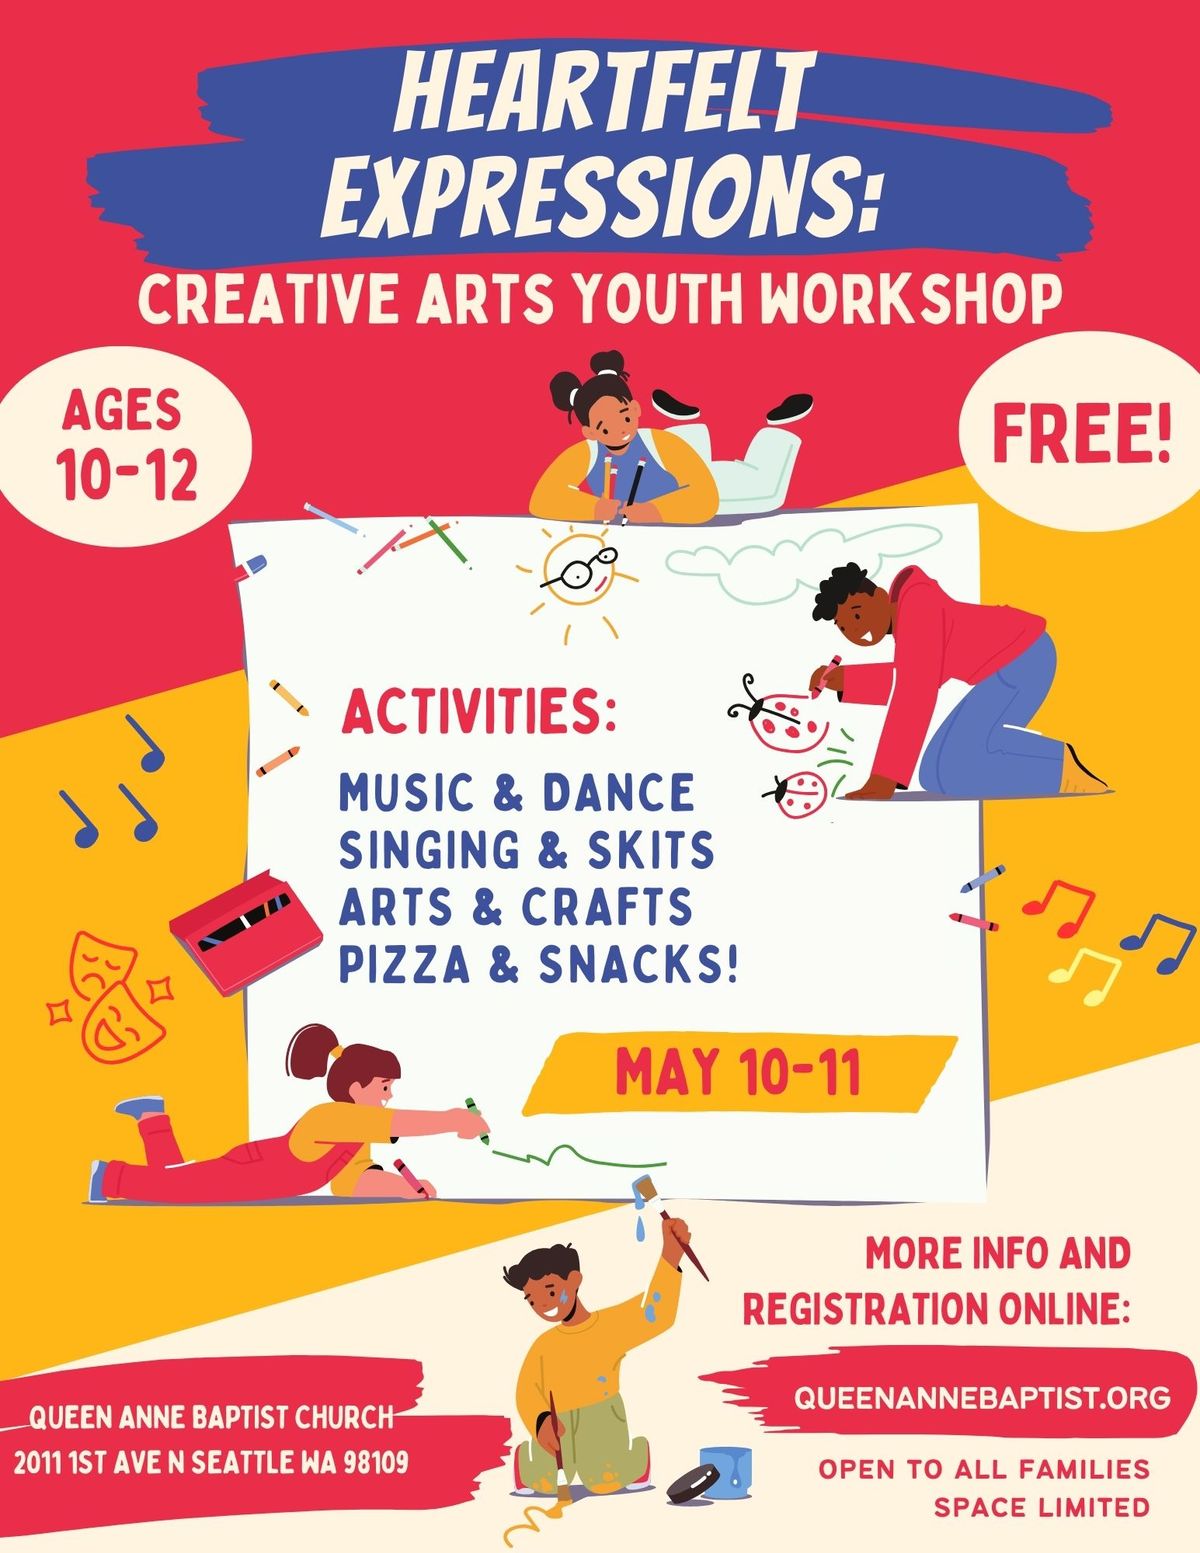 Heartfelt Expressions: Creative Arts Youth Workshop (Free!)